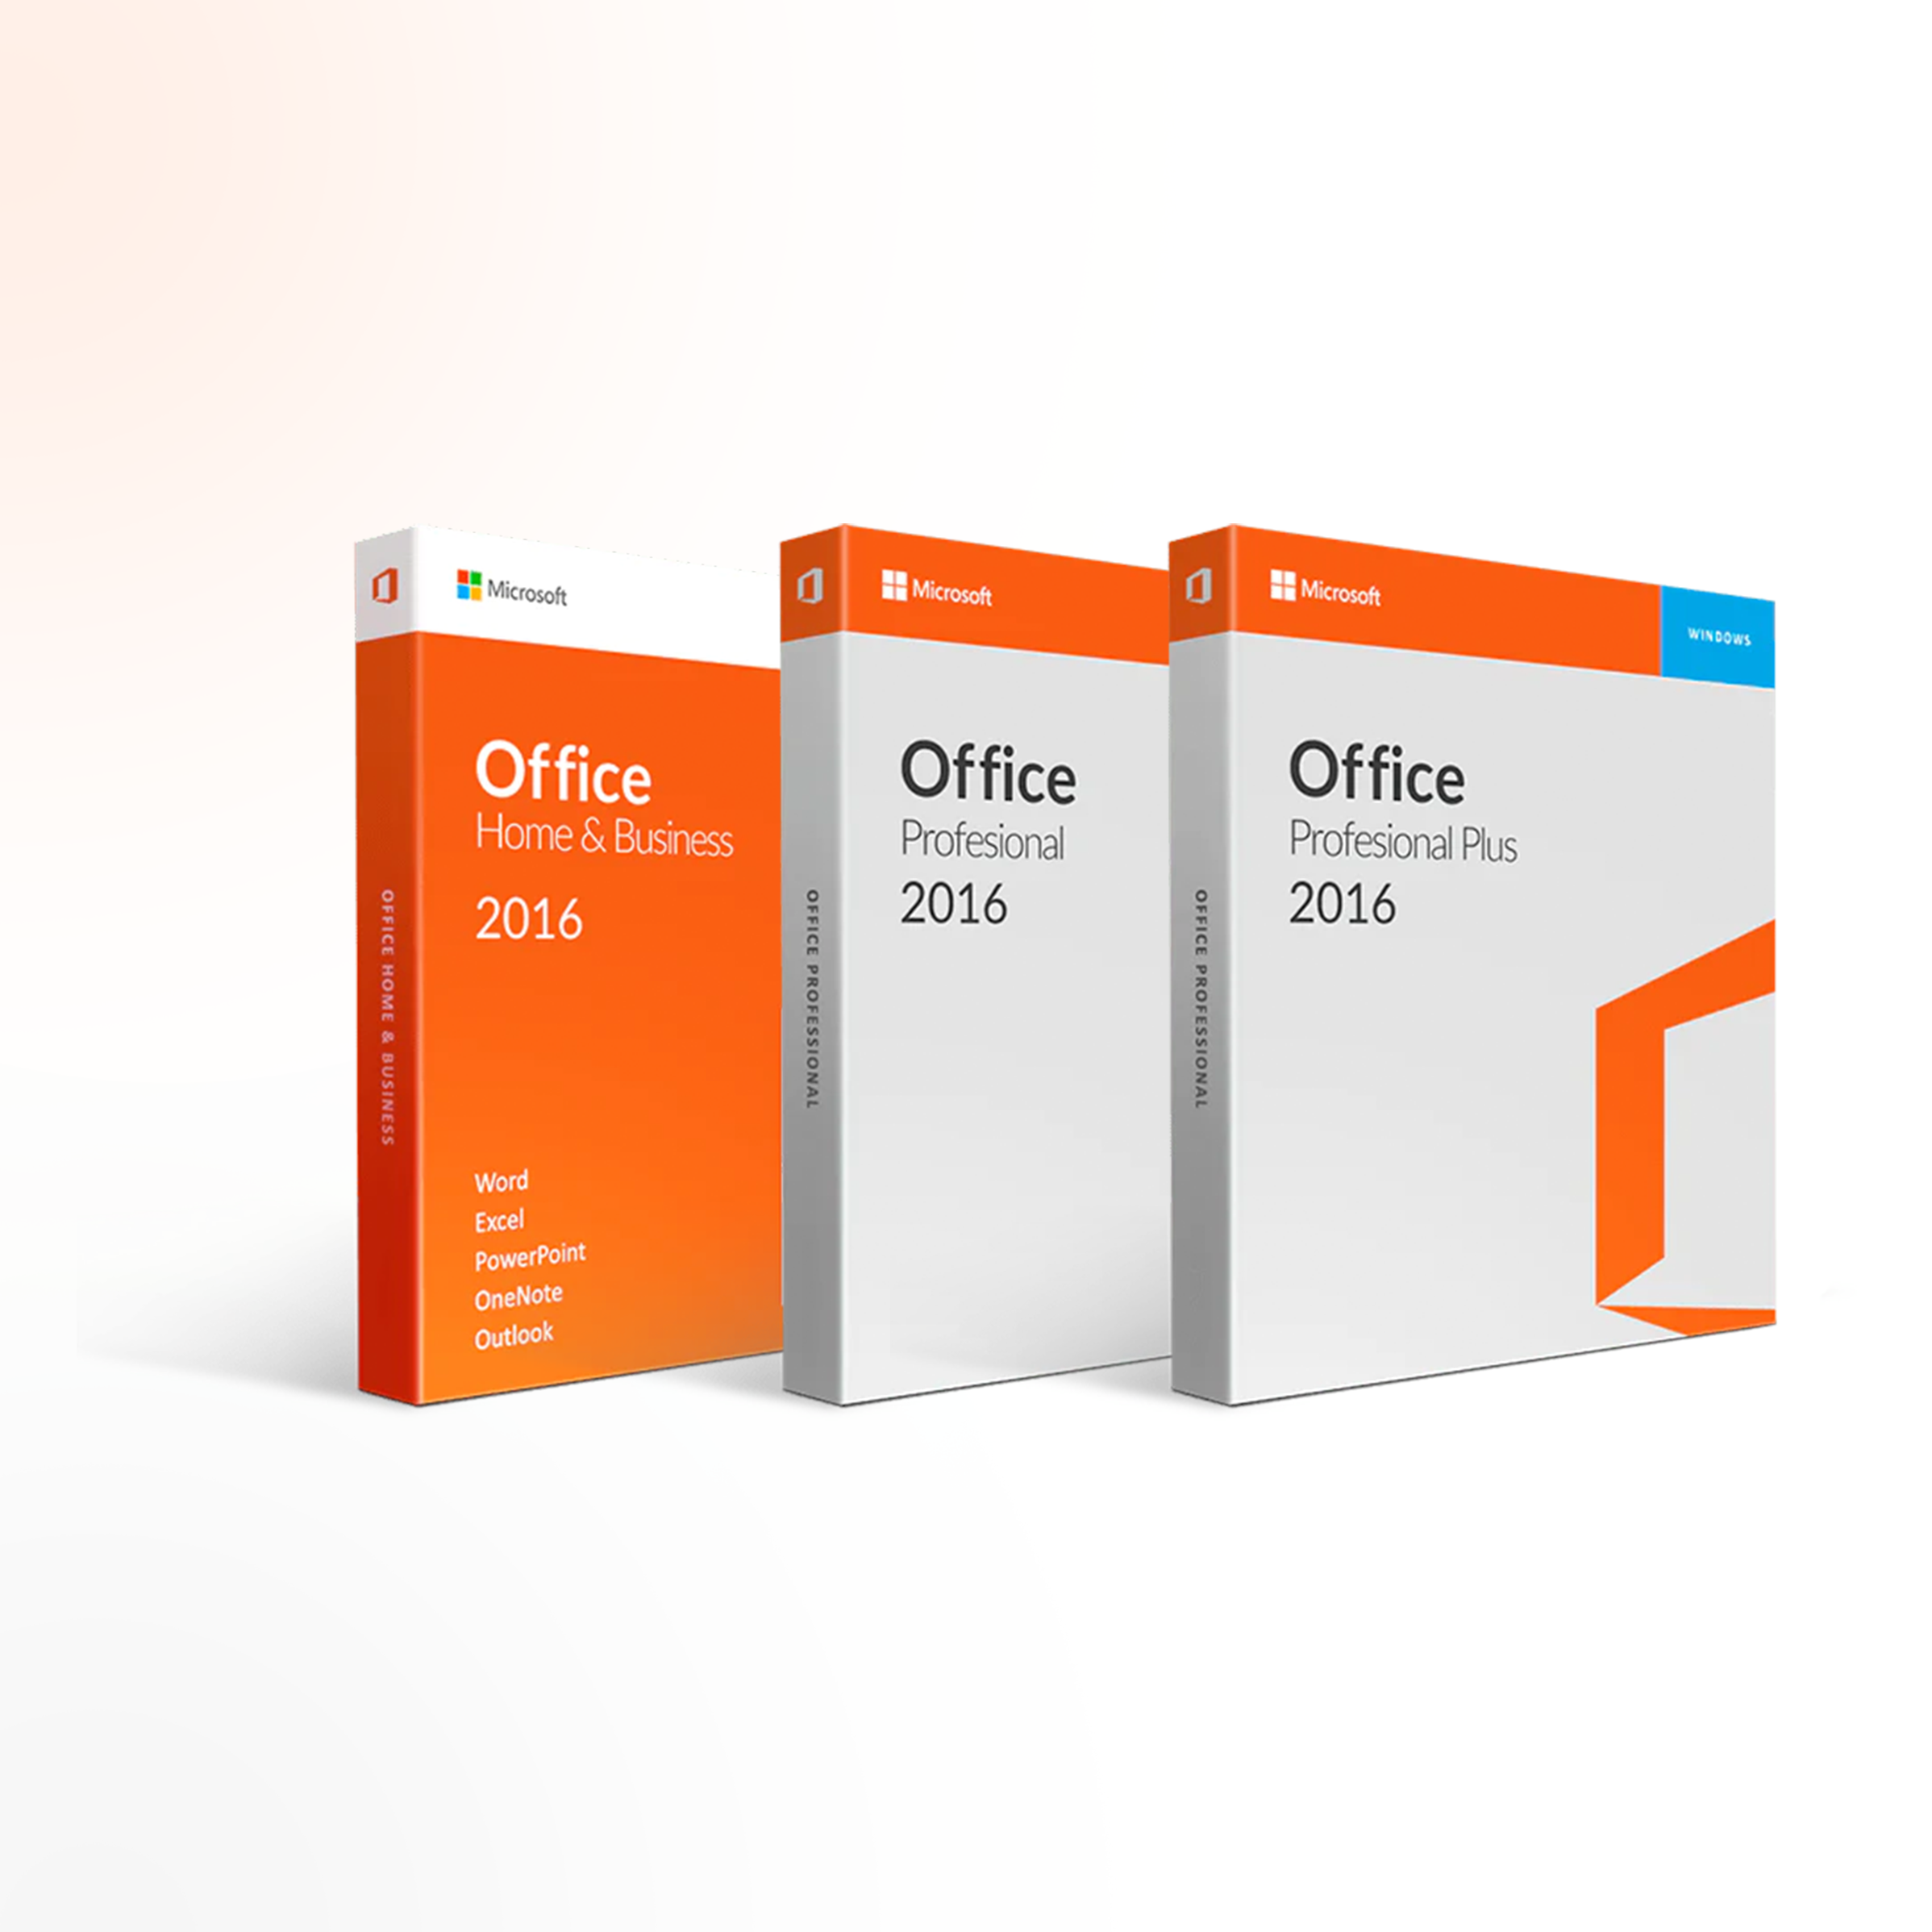 Office 2016 version comparison